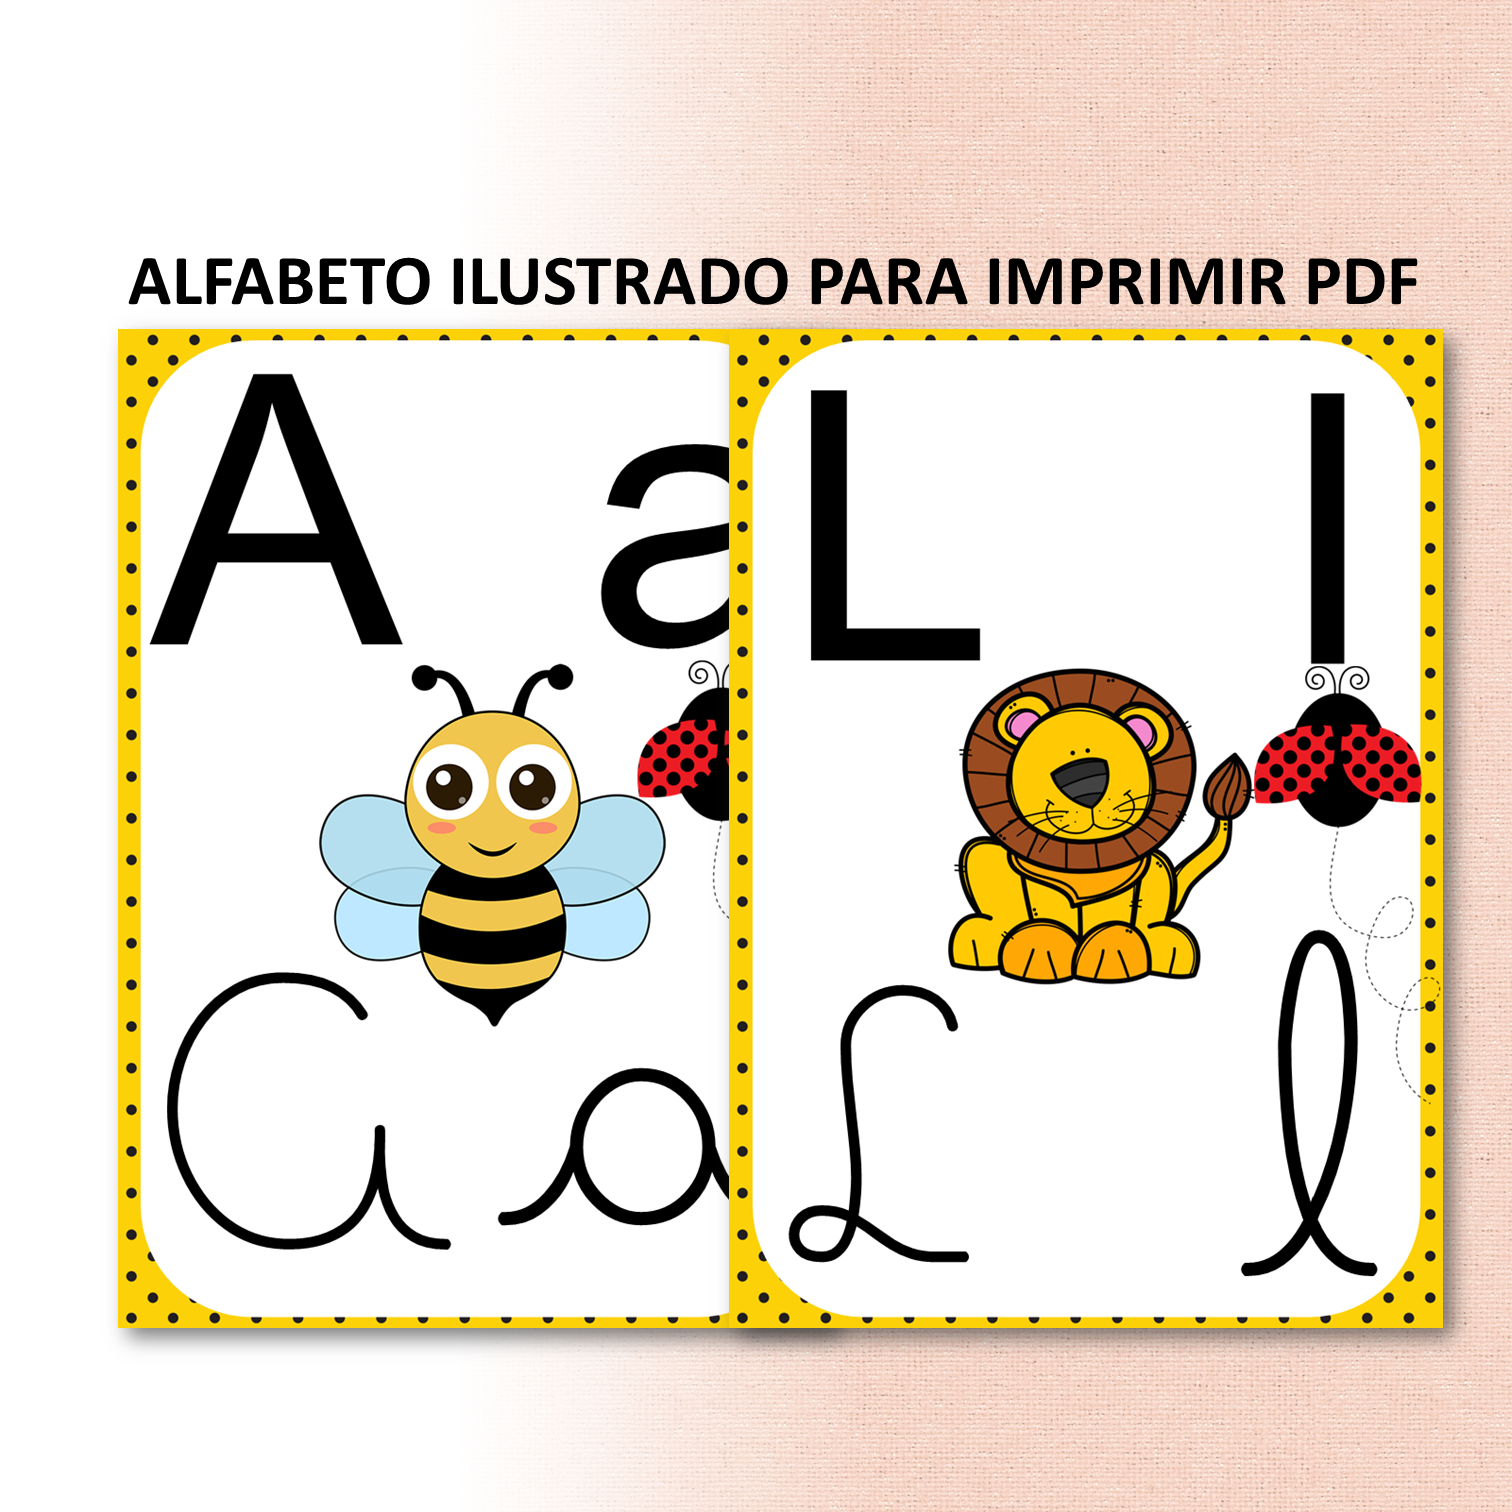 Alfabeto ilustrado para imprimir PDF